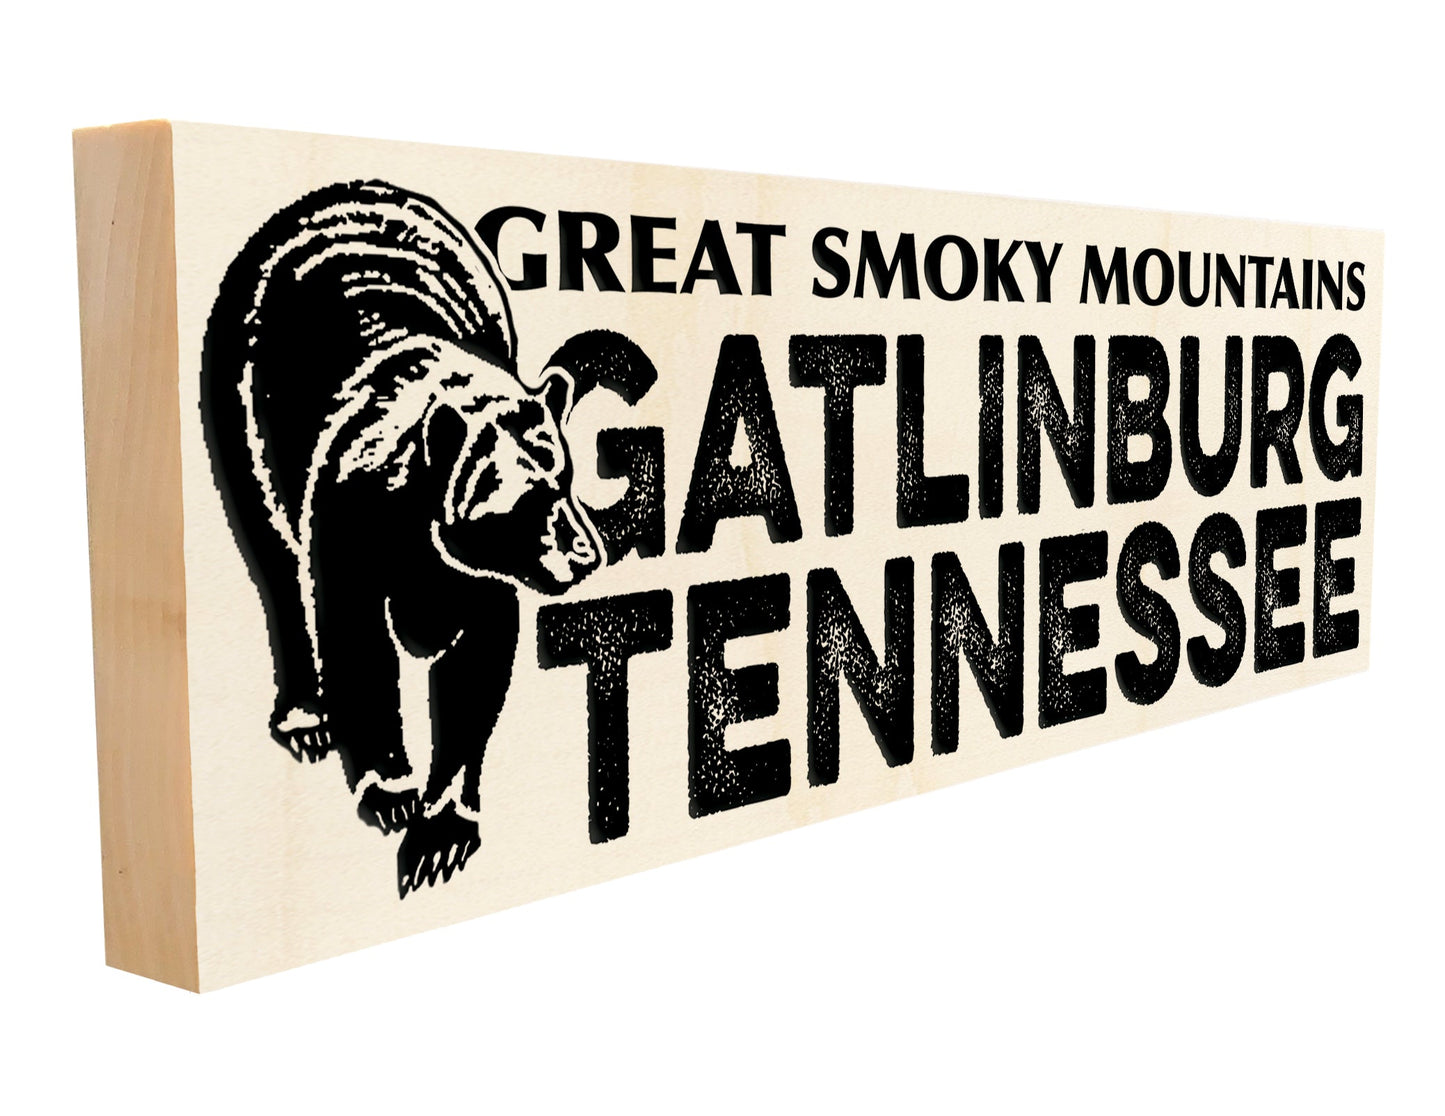 Great Smoky Mountains. Gatlinburg.